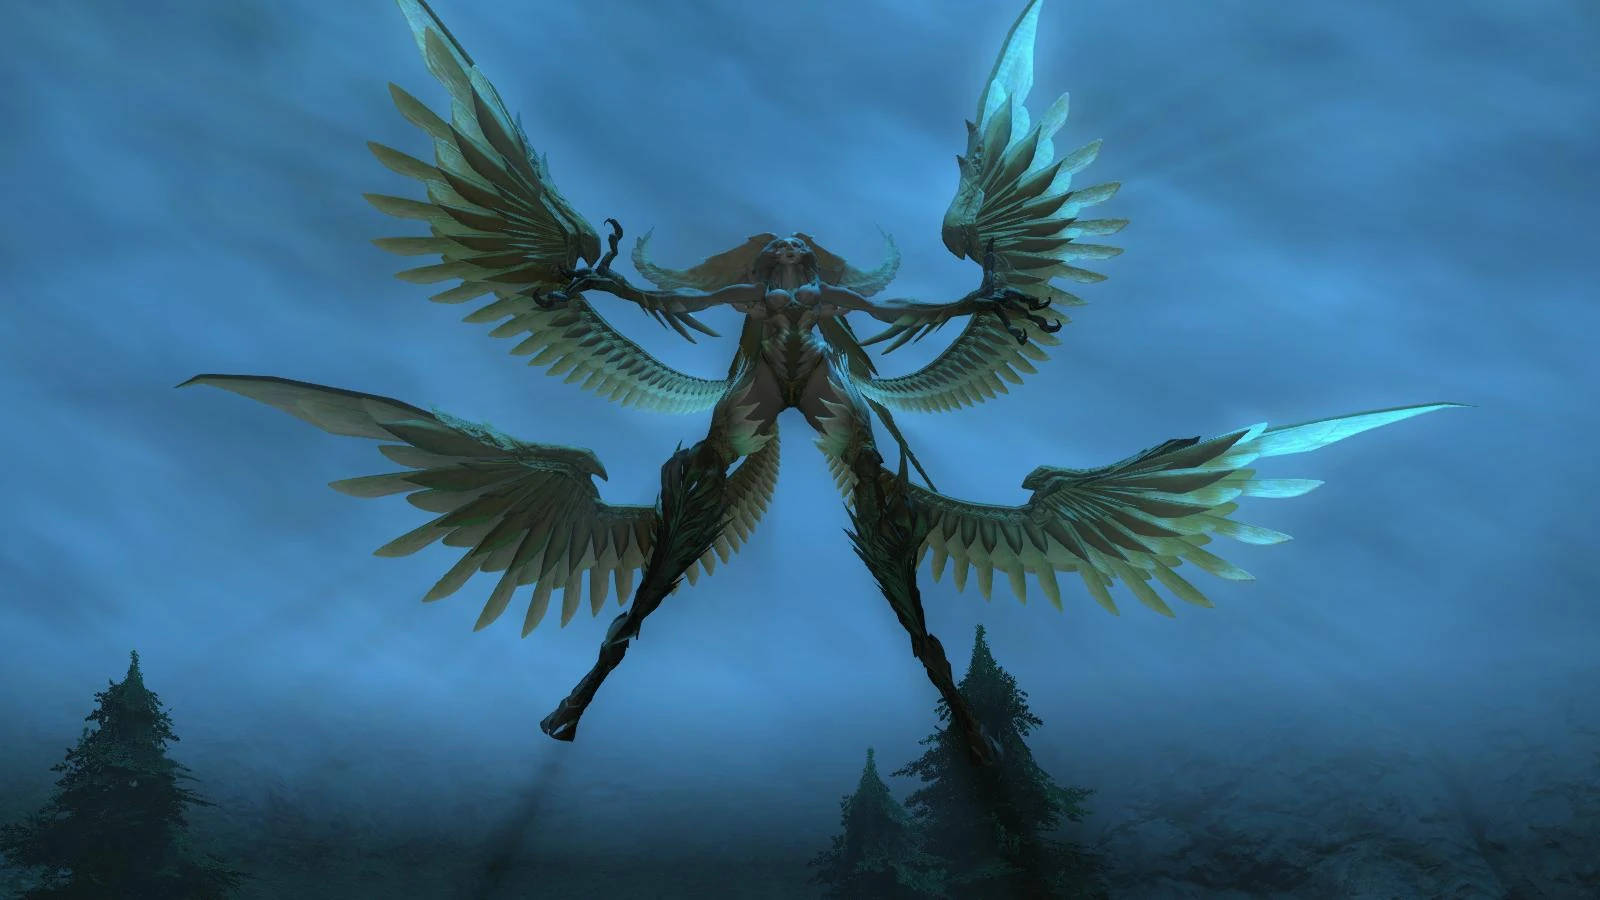 Final Fantasy Xiv Garuda Summon Background